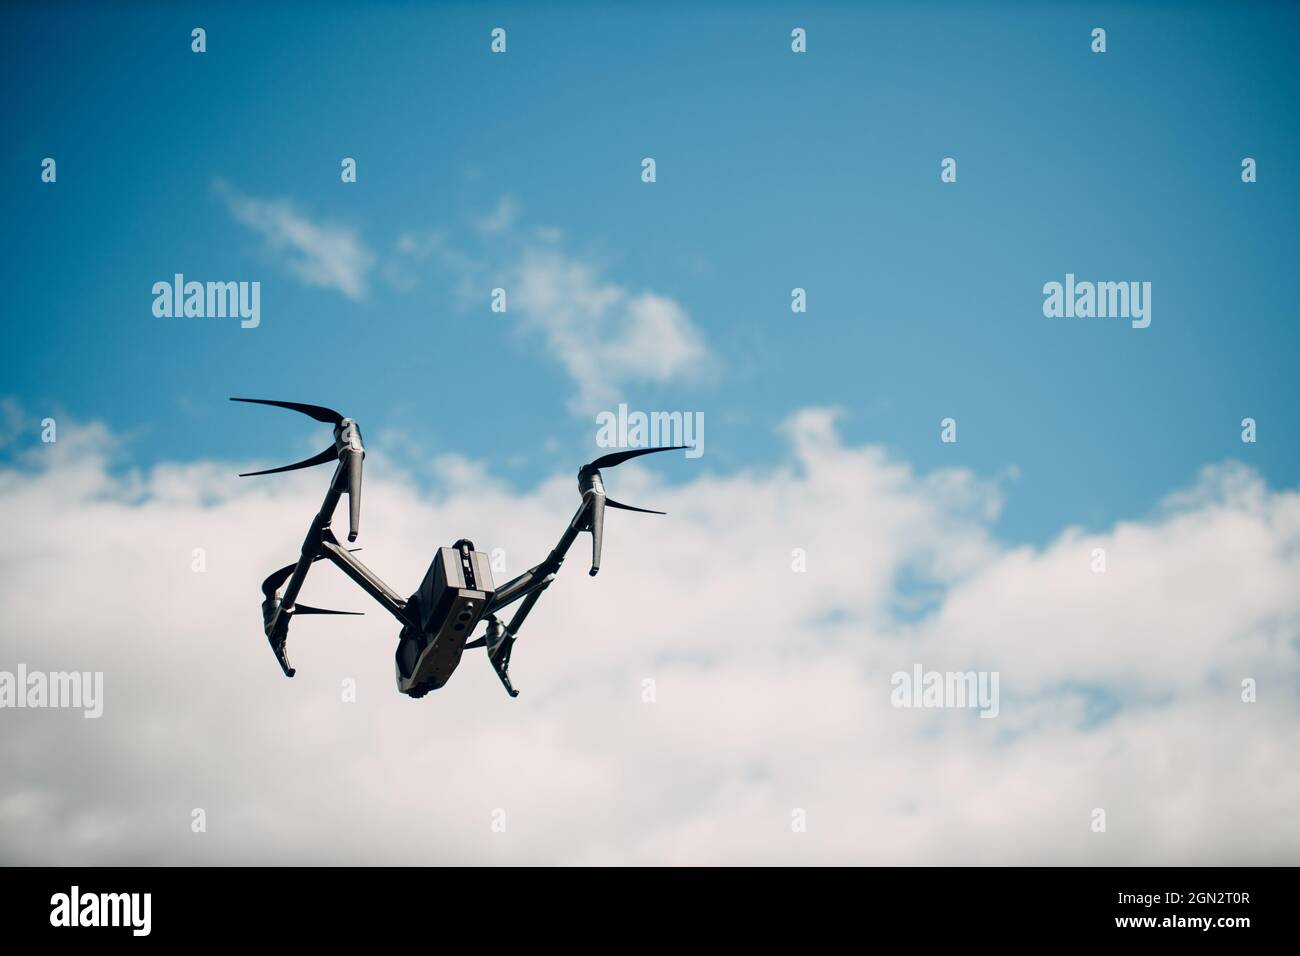 New York, USA - 18. SEPTEMBER 2021: DJI Inspire 2 Quadcopter-Drohne am Boden vor dem Flug und den Dreharbeiten Stockfoto